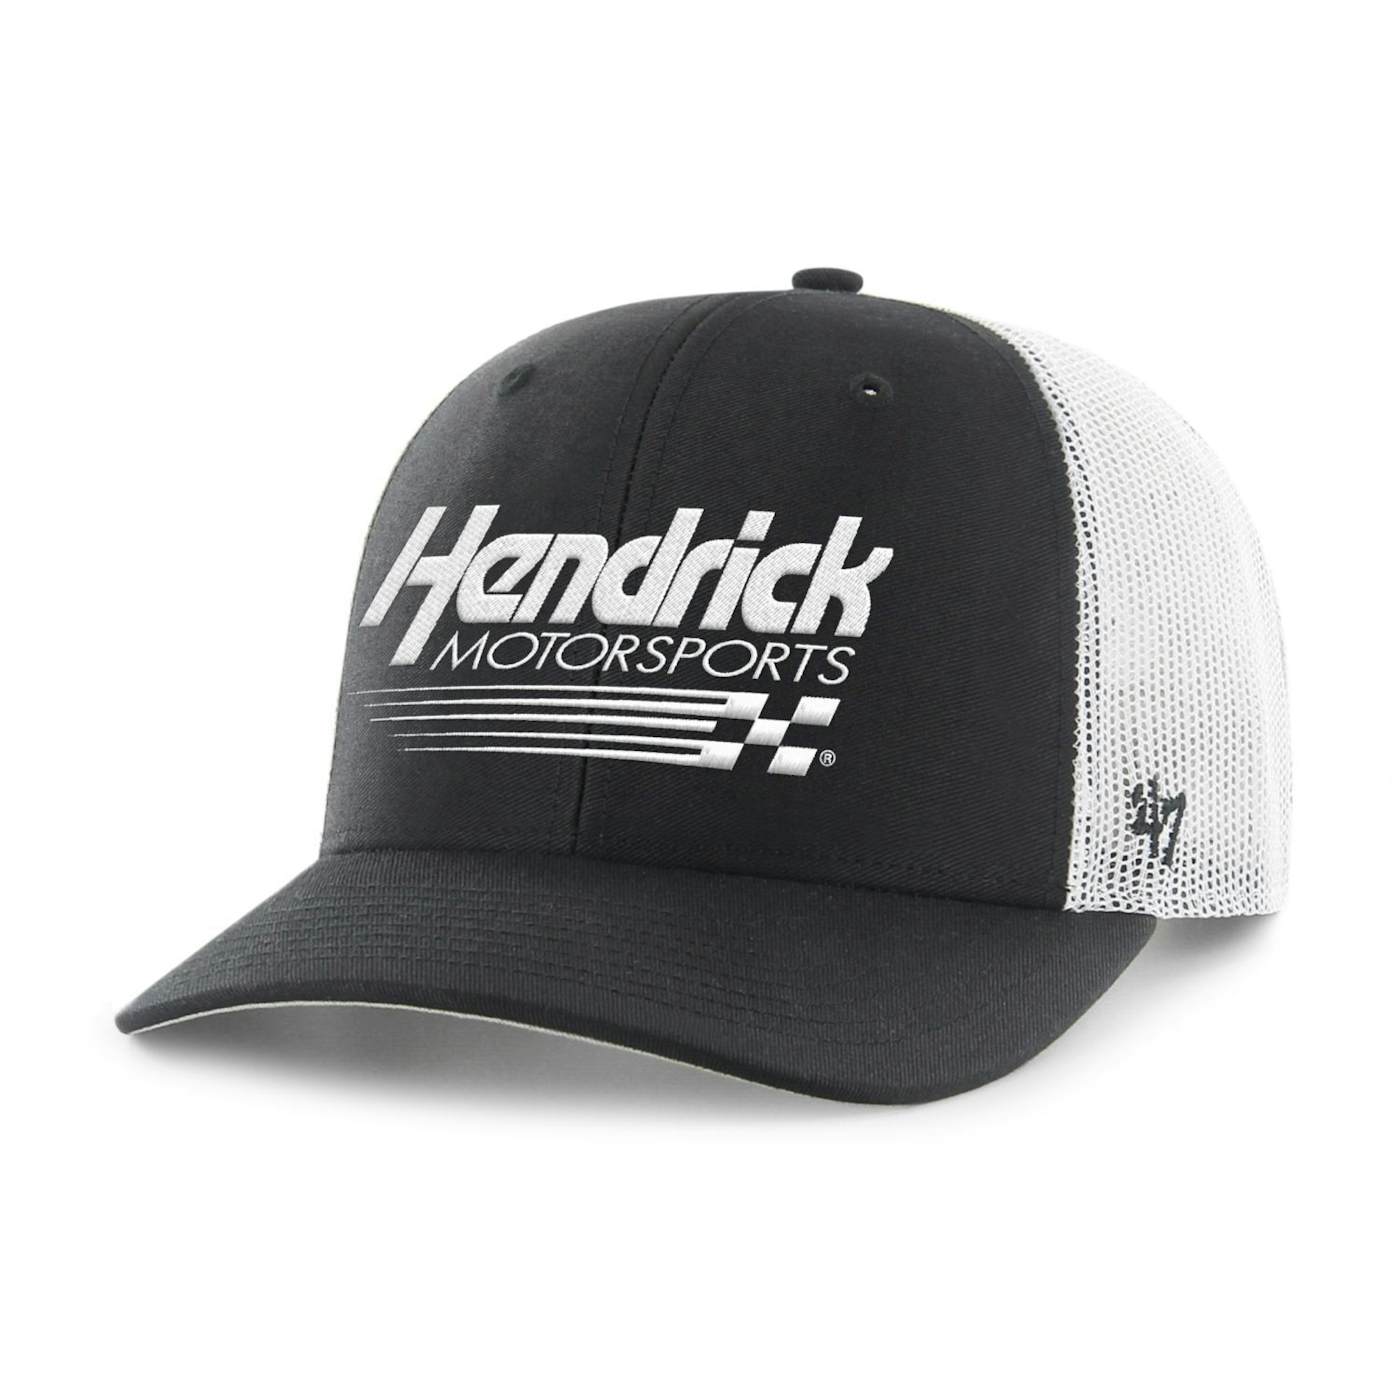 Hendrick Motorsports 47 Brand Trucker Hat